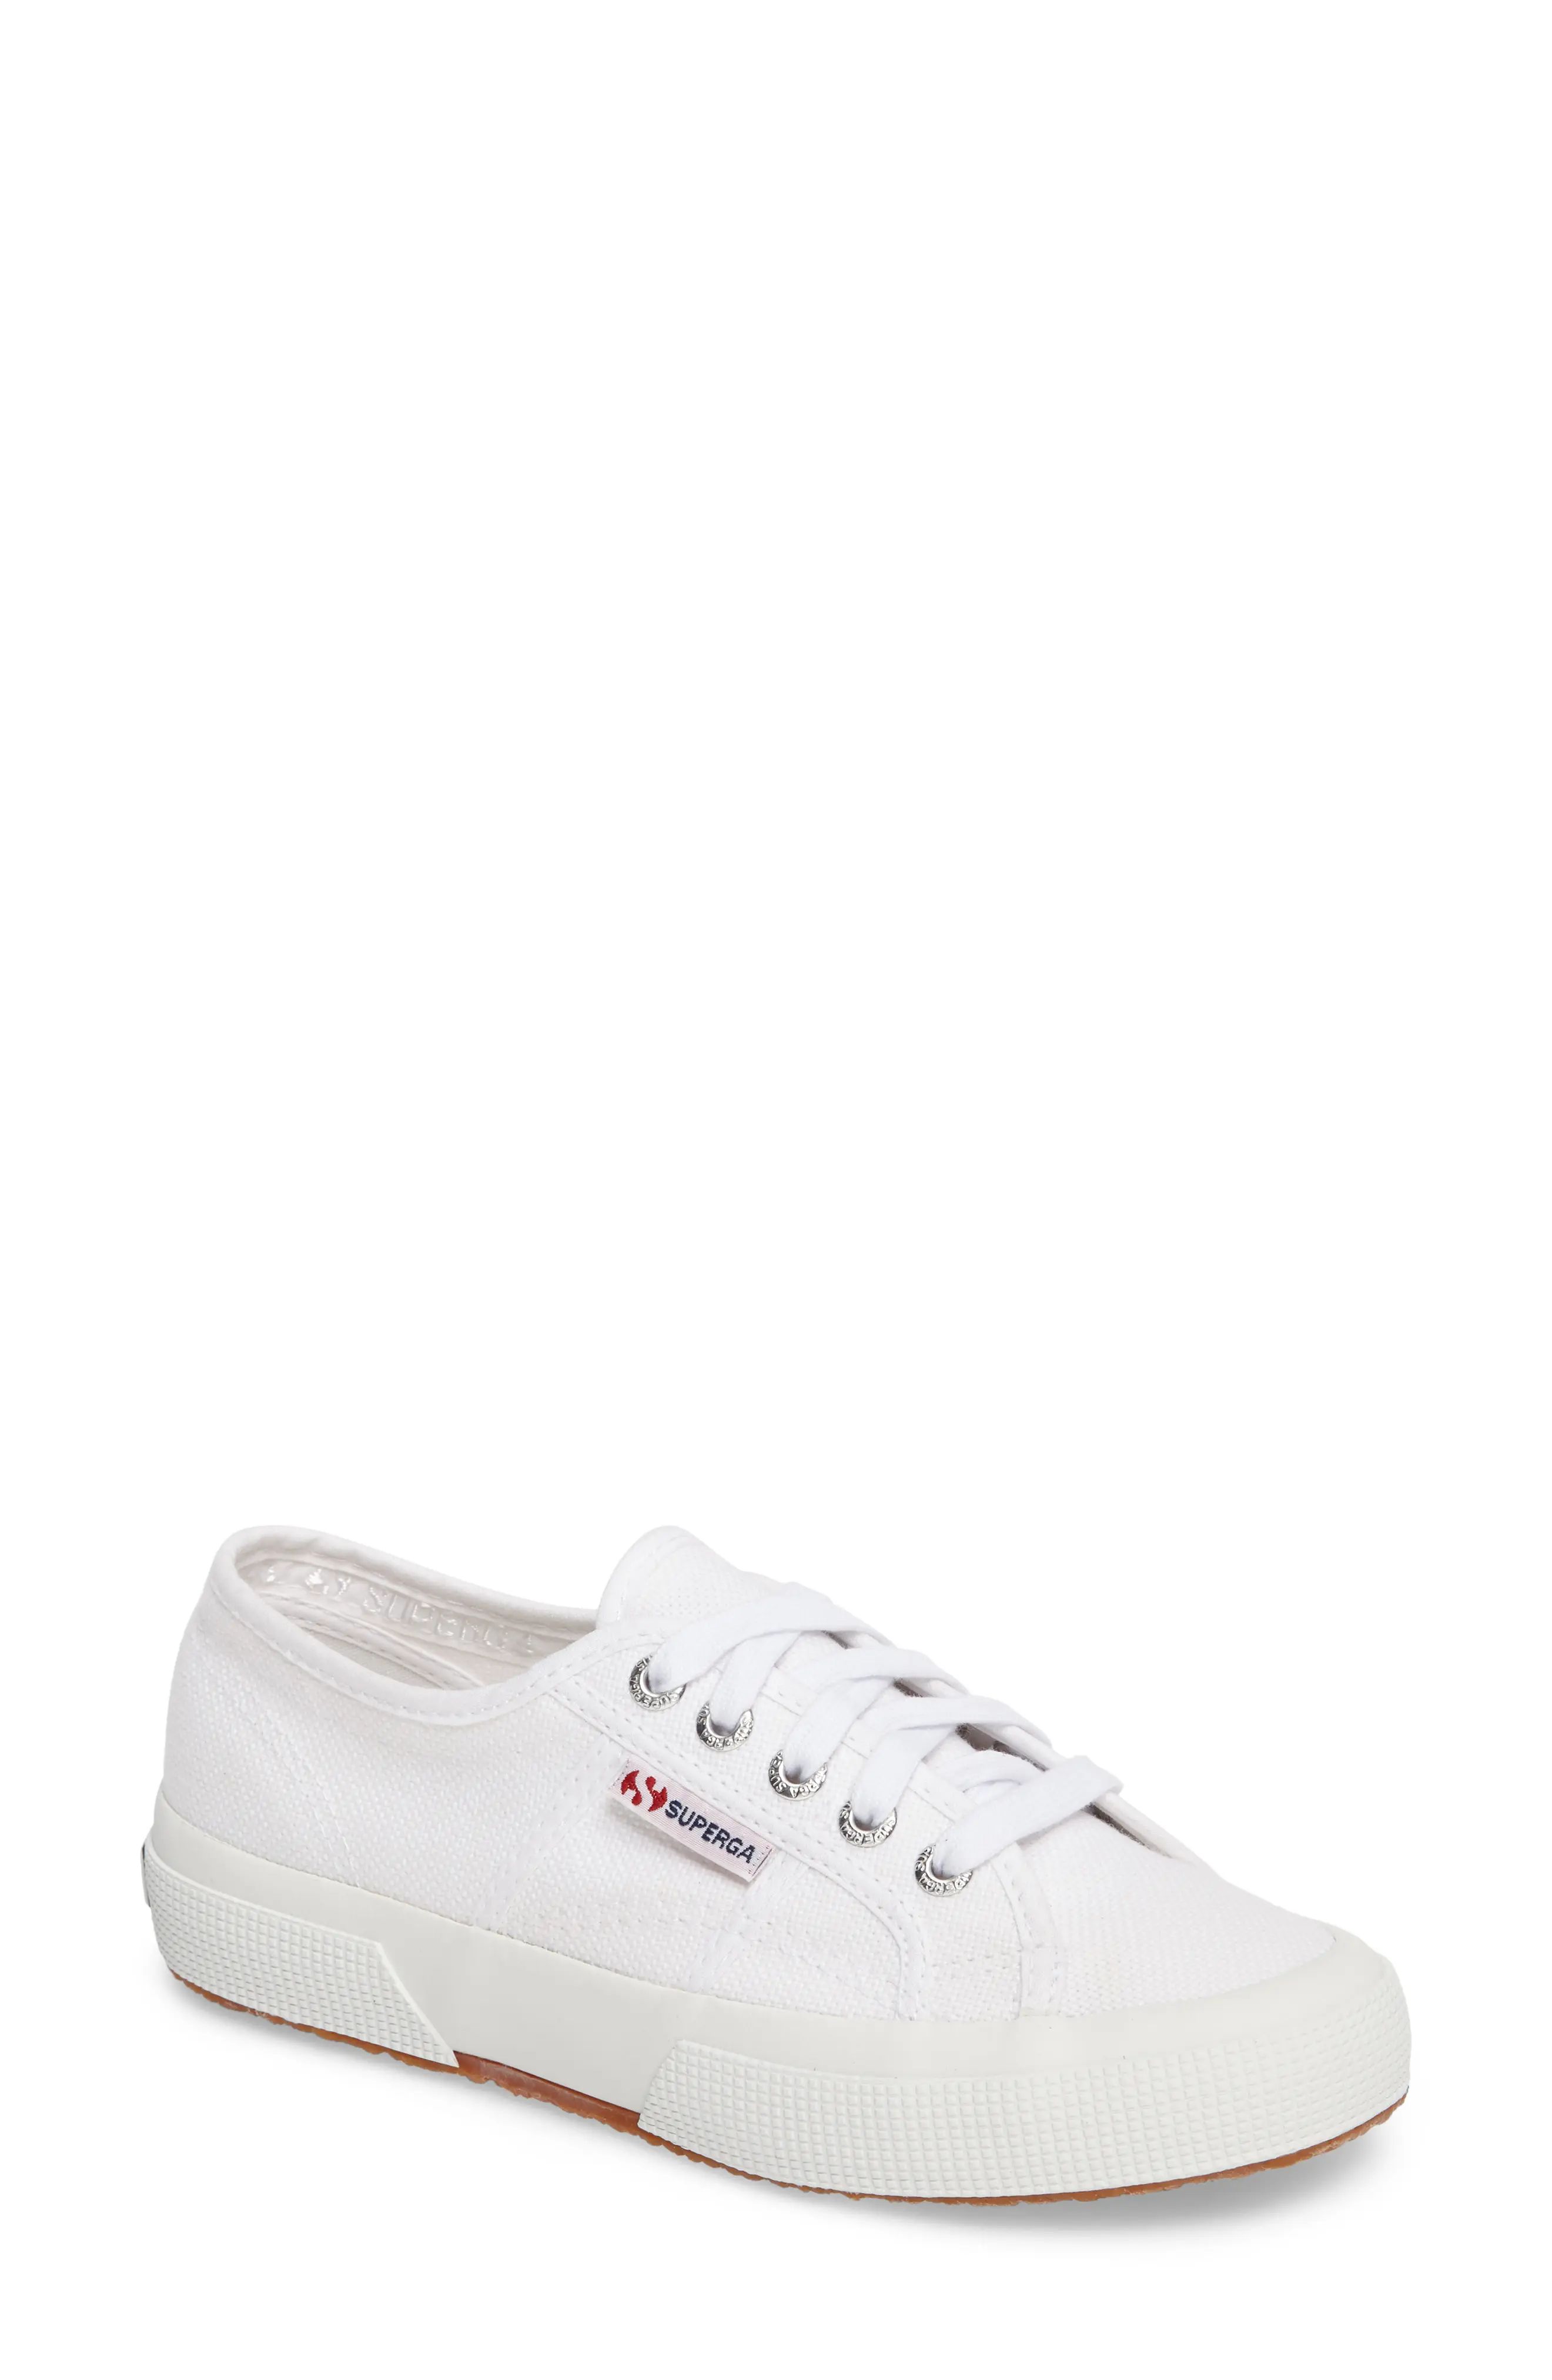 Women's Superga 'Cotu' Sneaker, Size 5US - White | Nordstrom